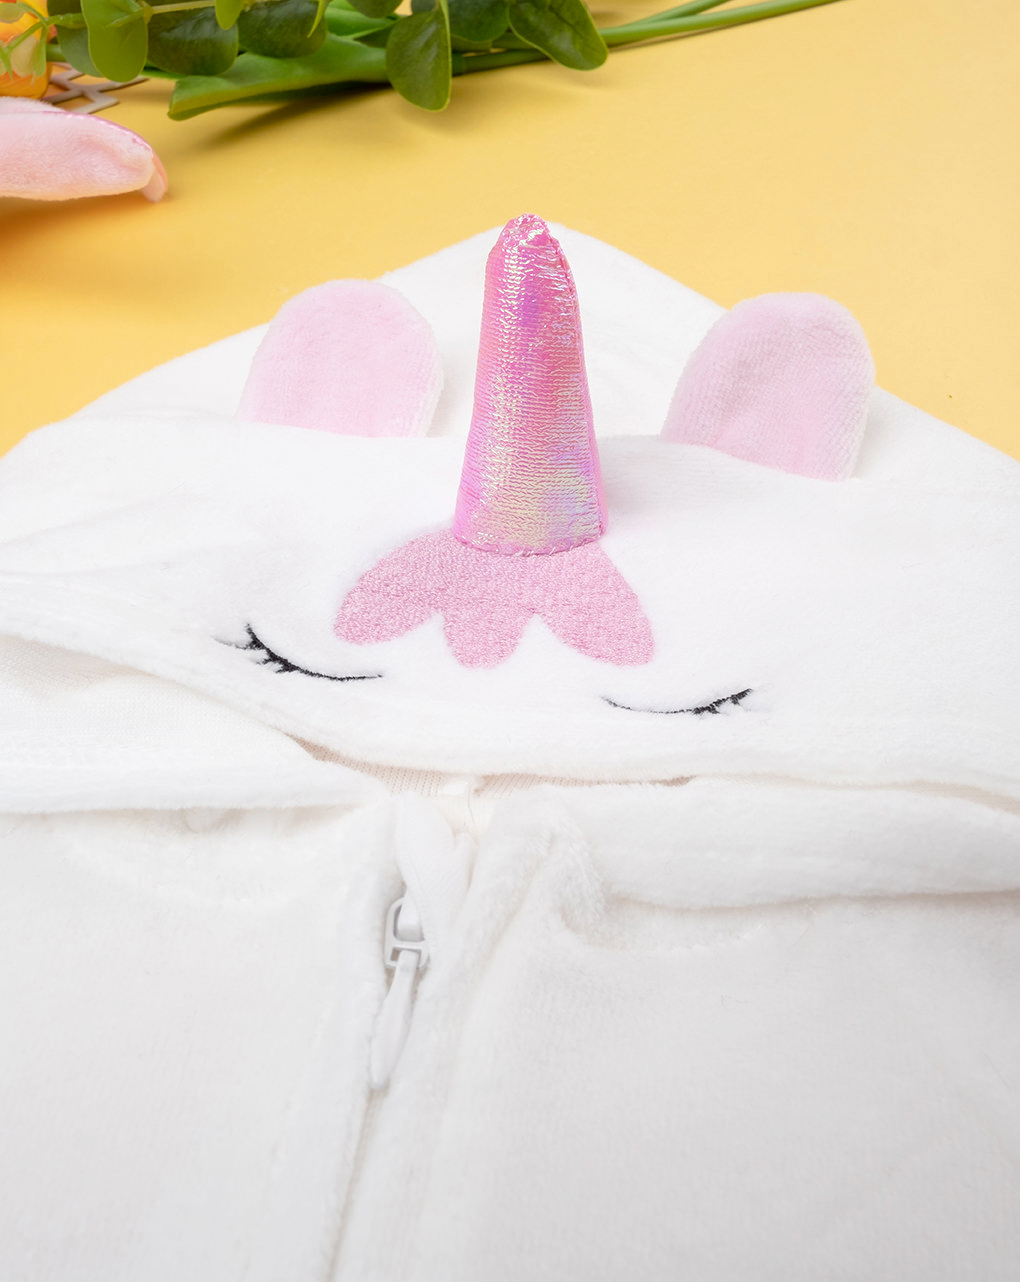 Pelele rosa con capucha de unicornio - Prénatal